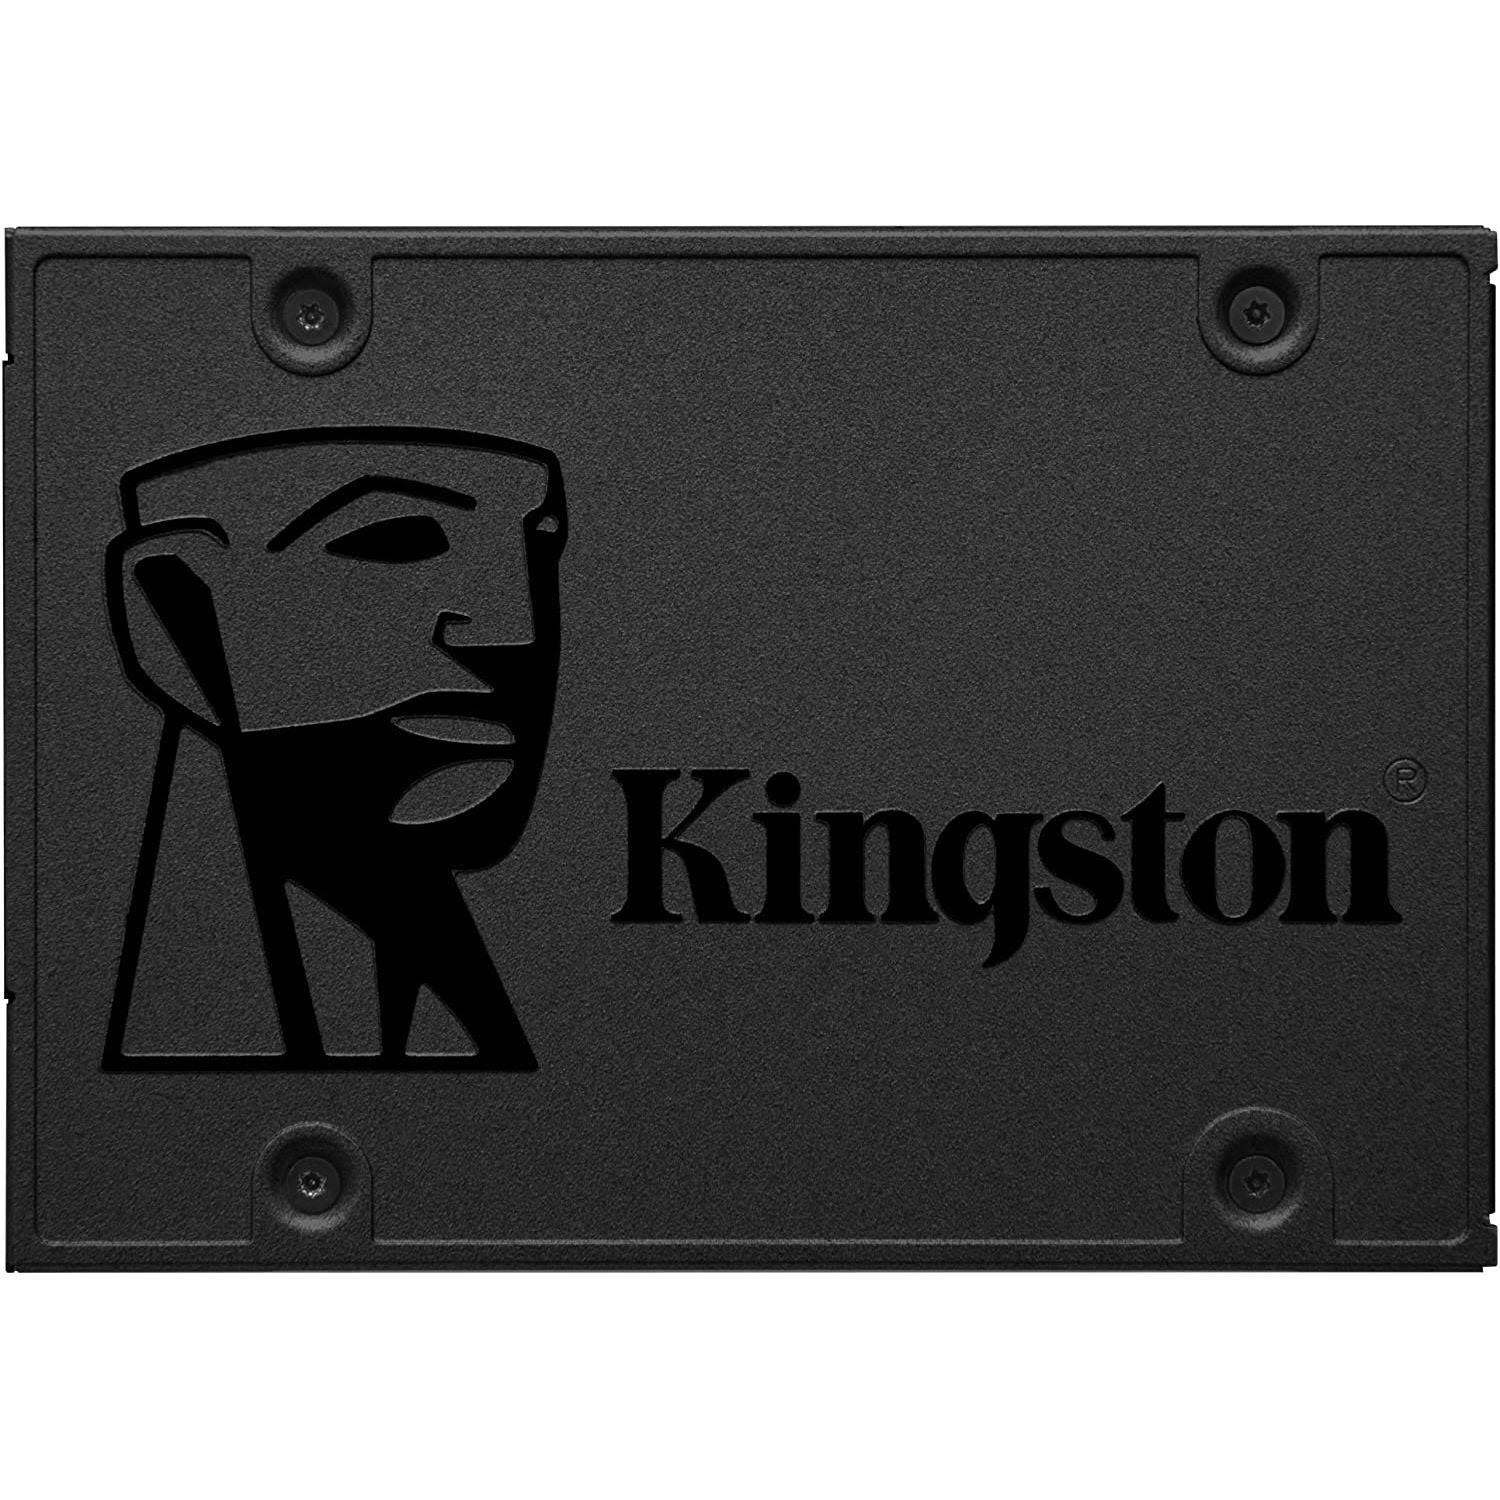 Kingston A400 SSD Sata 3 Solid State Drive - 960gb, 2.5"